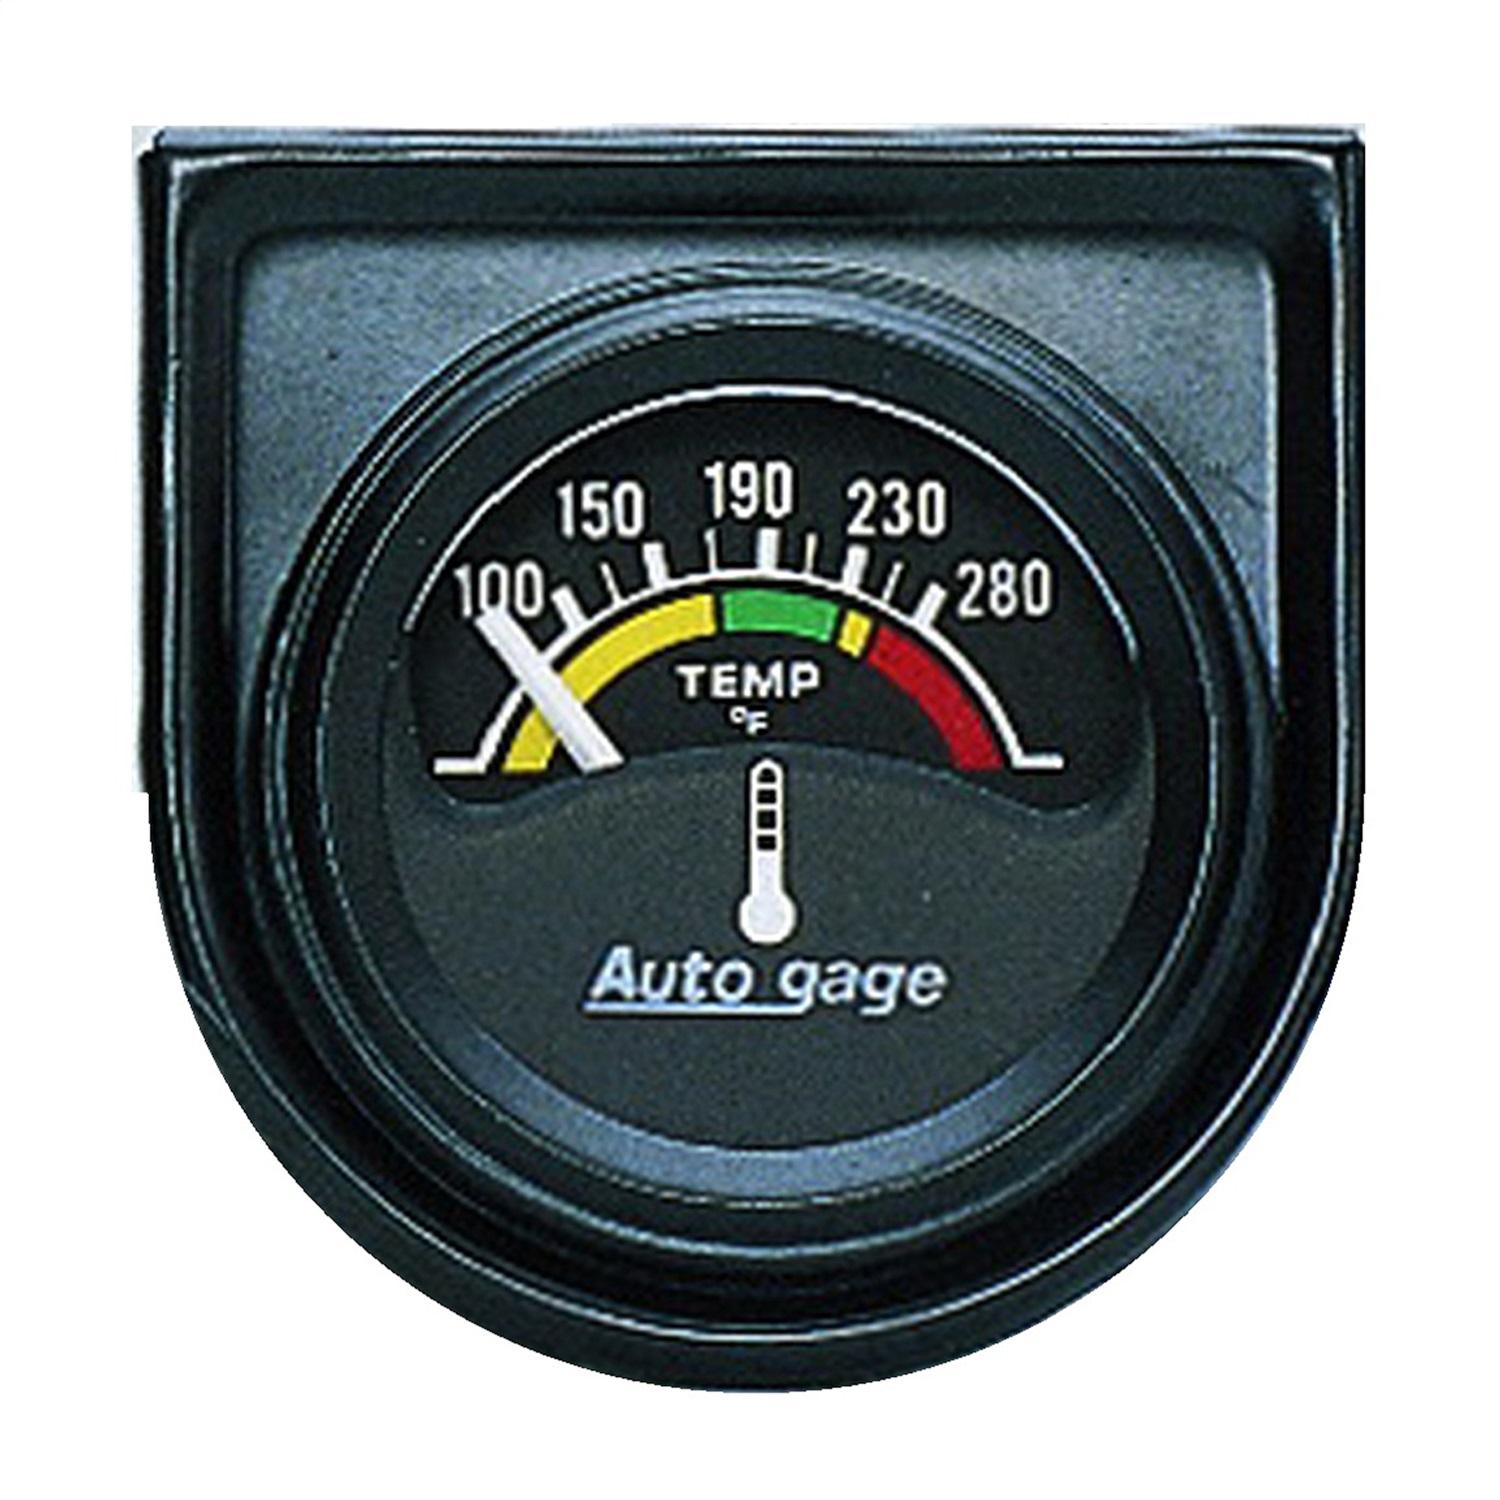 Auto Meter Auto Meter 2355 Autogage; Electric Water Temperature Gauge